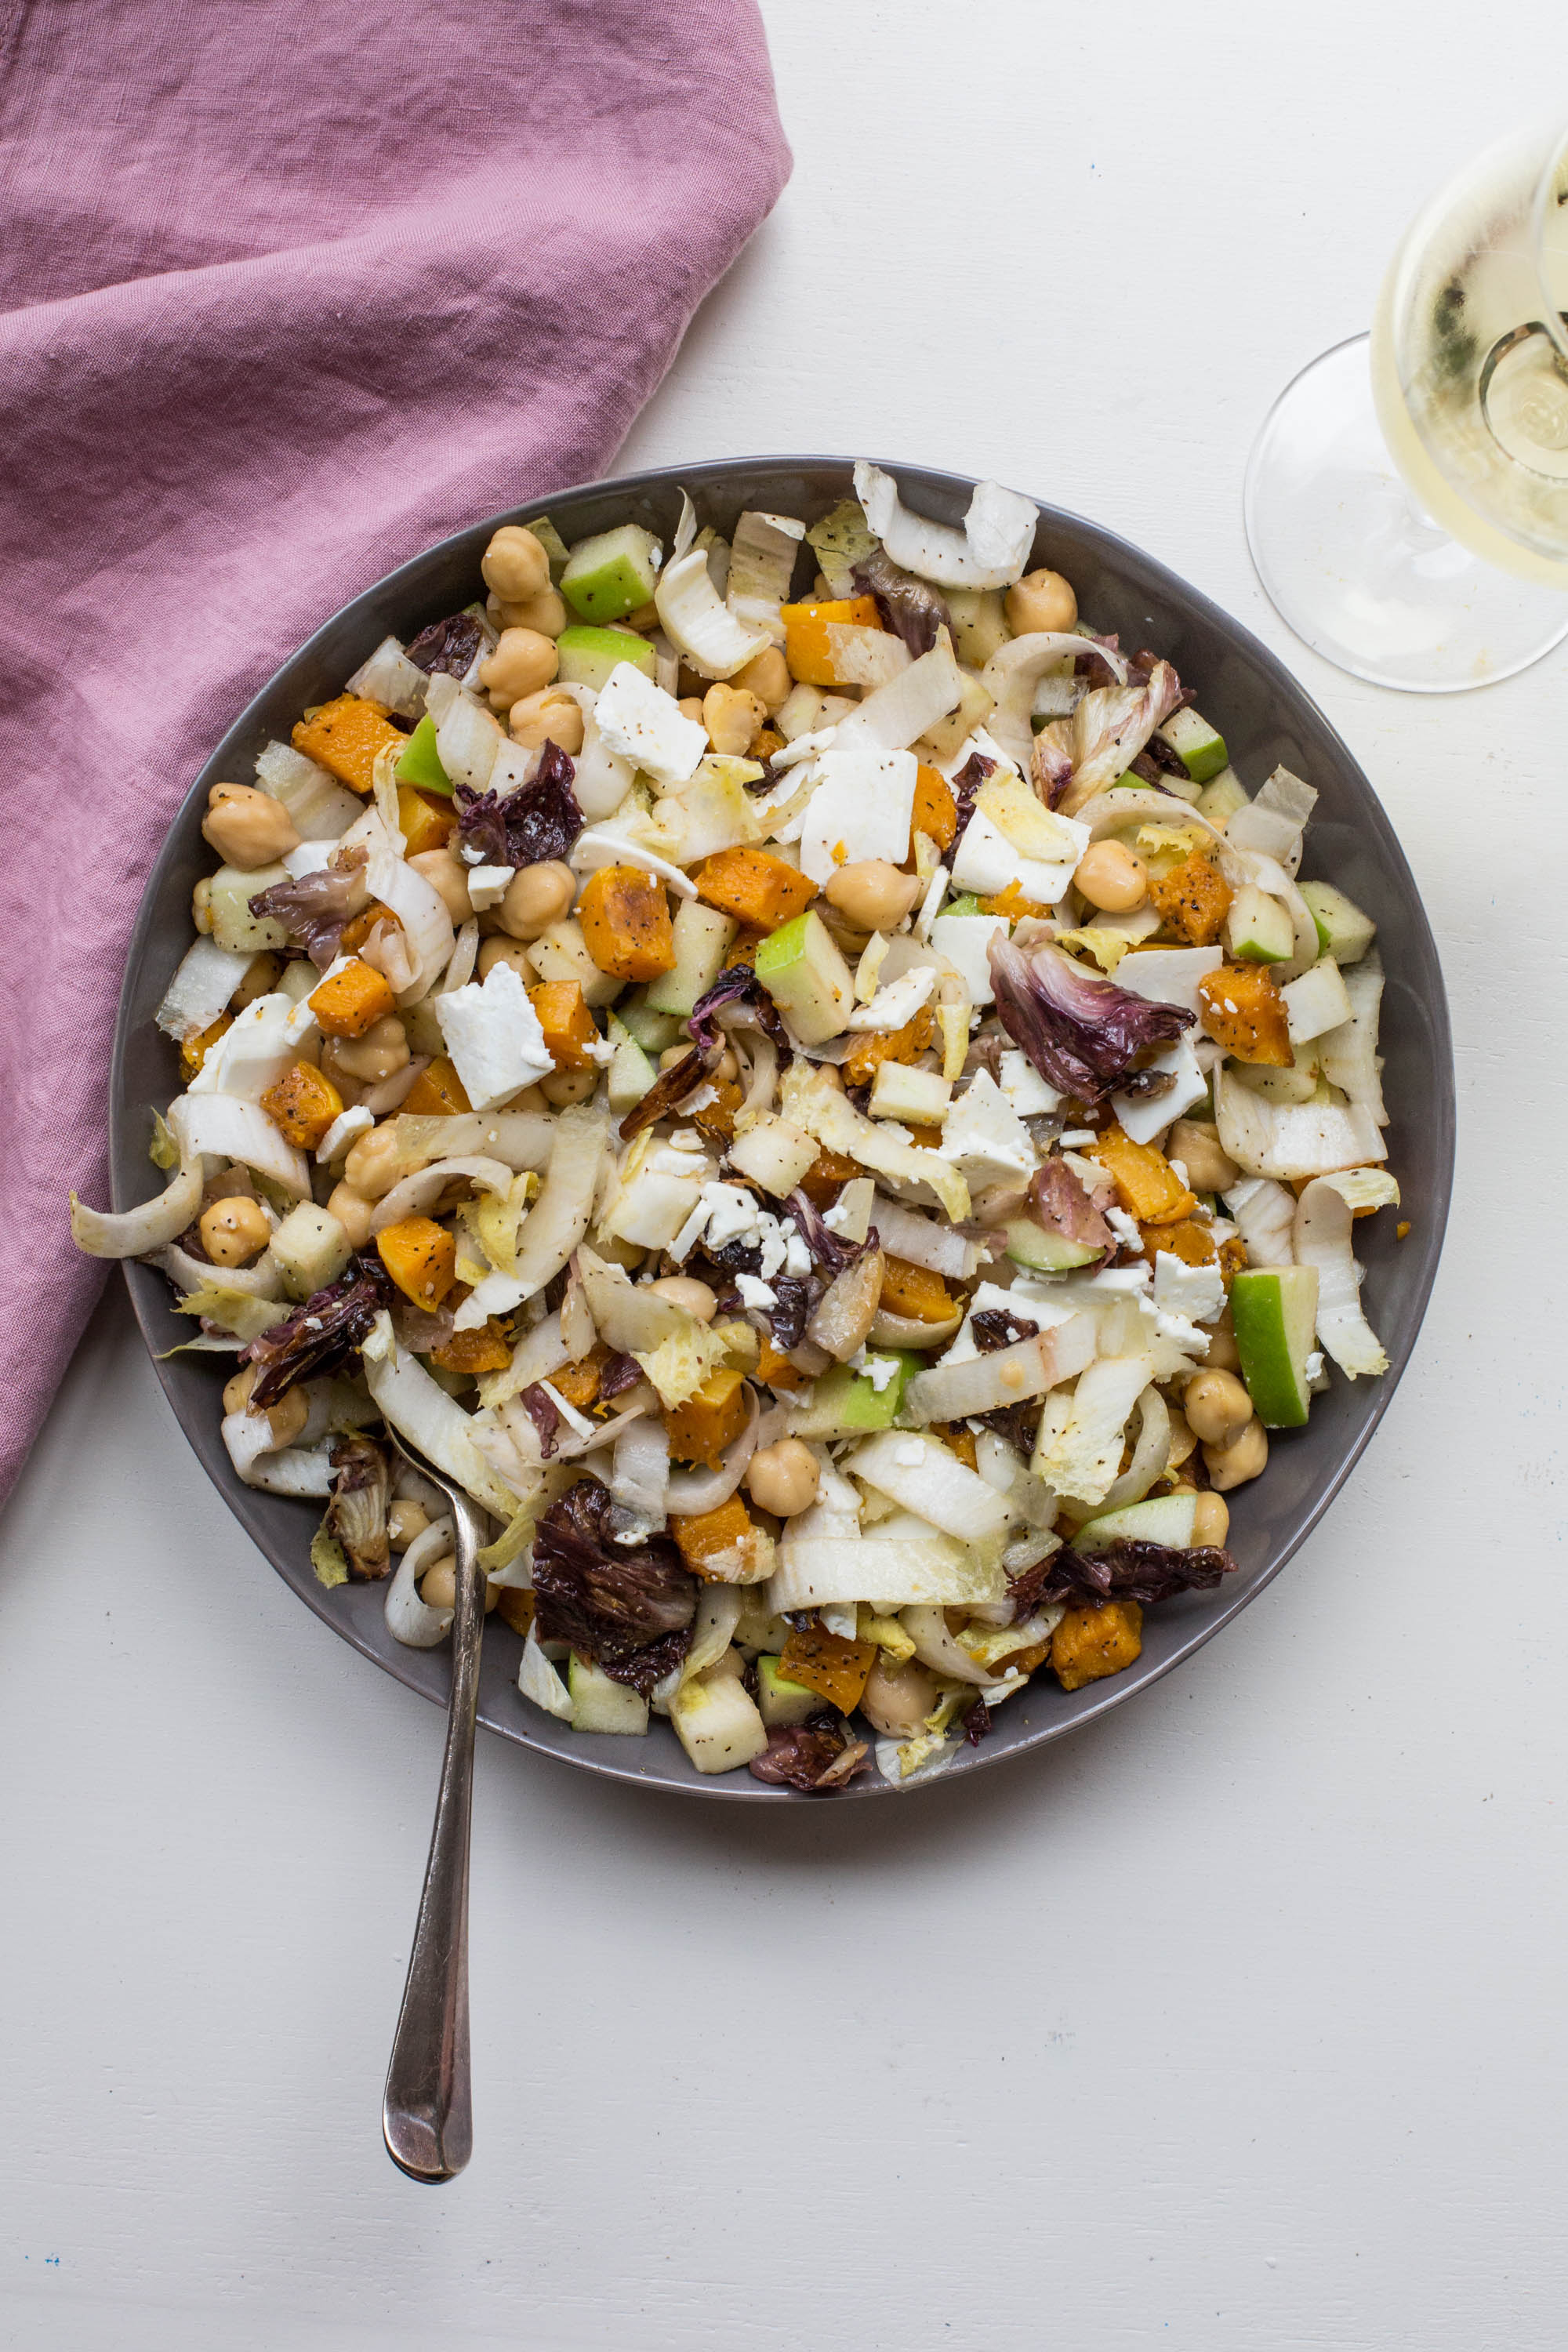 Large, grey serving bowl of Chopped Winter Salad.